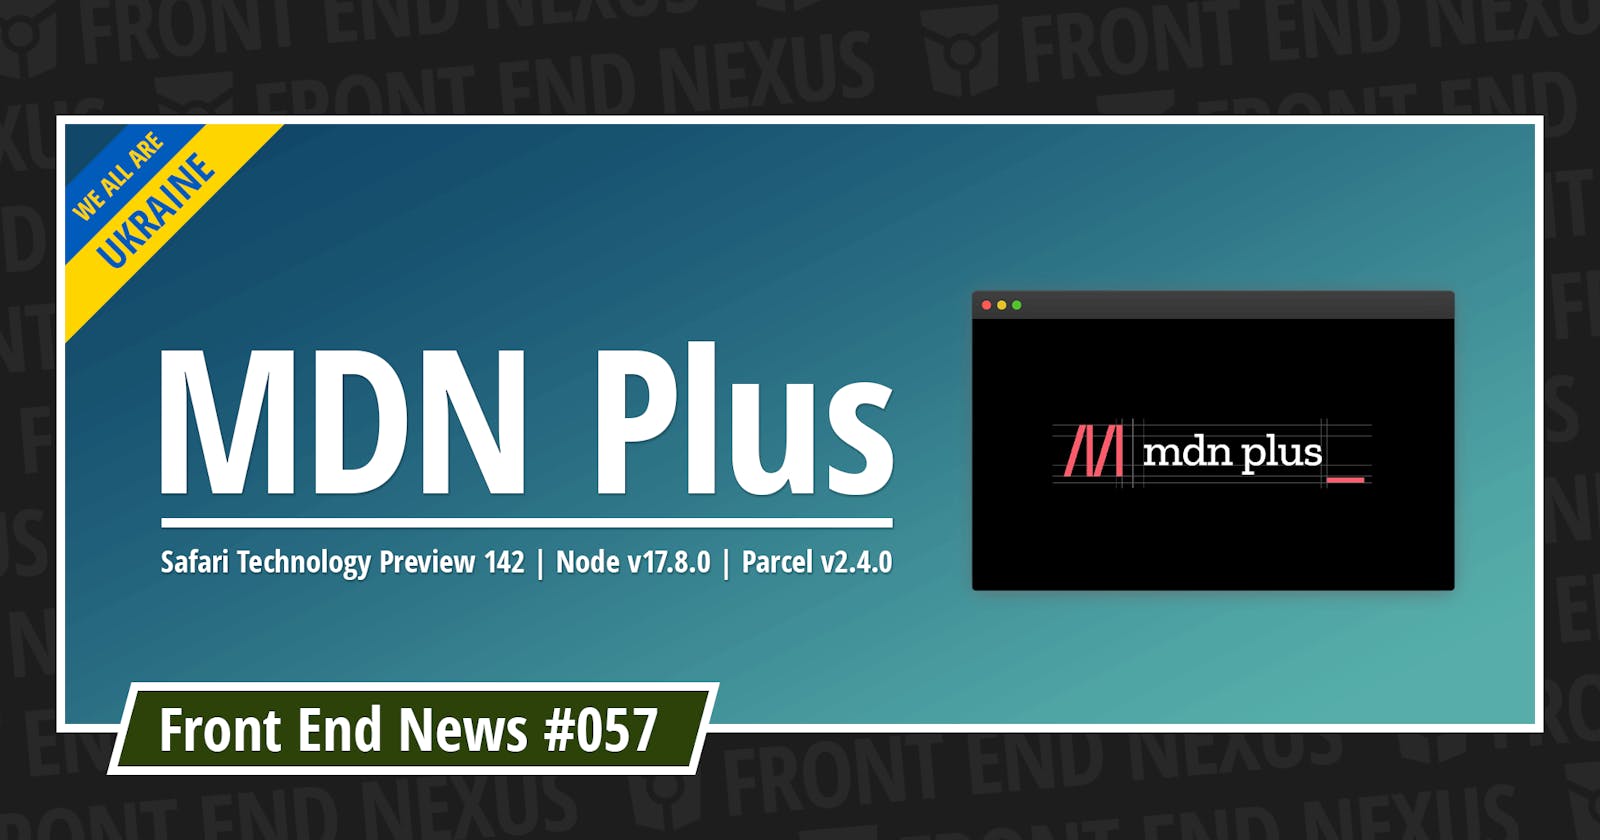 MDN Plus, Safari Technology Preview 142, Node v17.8.0, Parcel v2.4.0, and more | Front End News #057